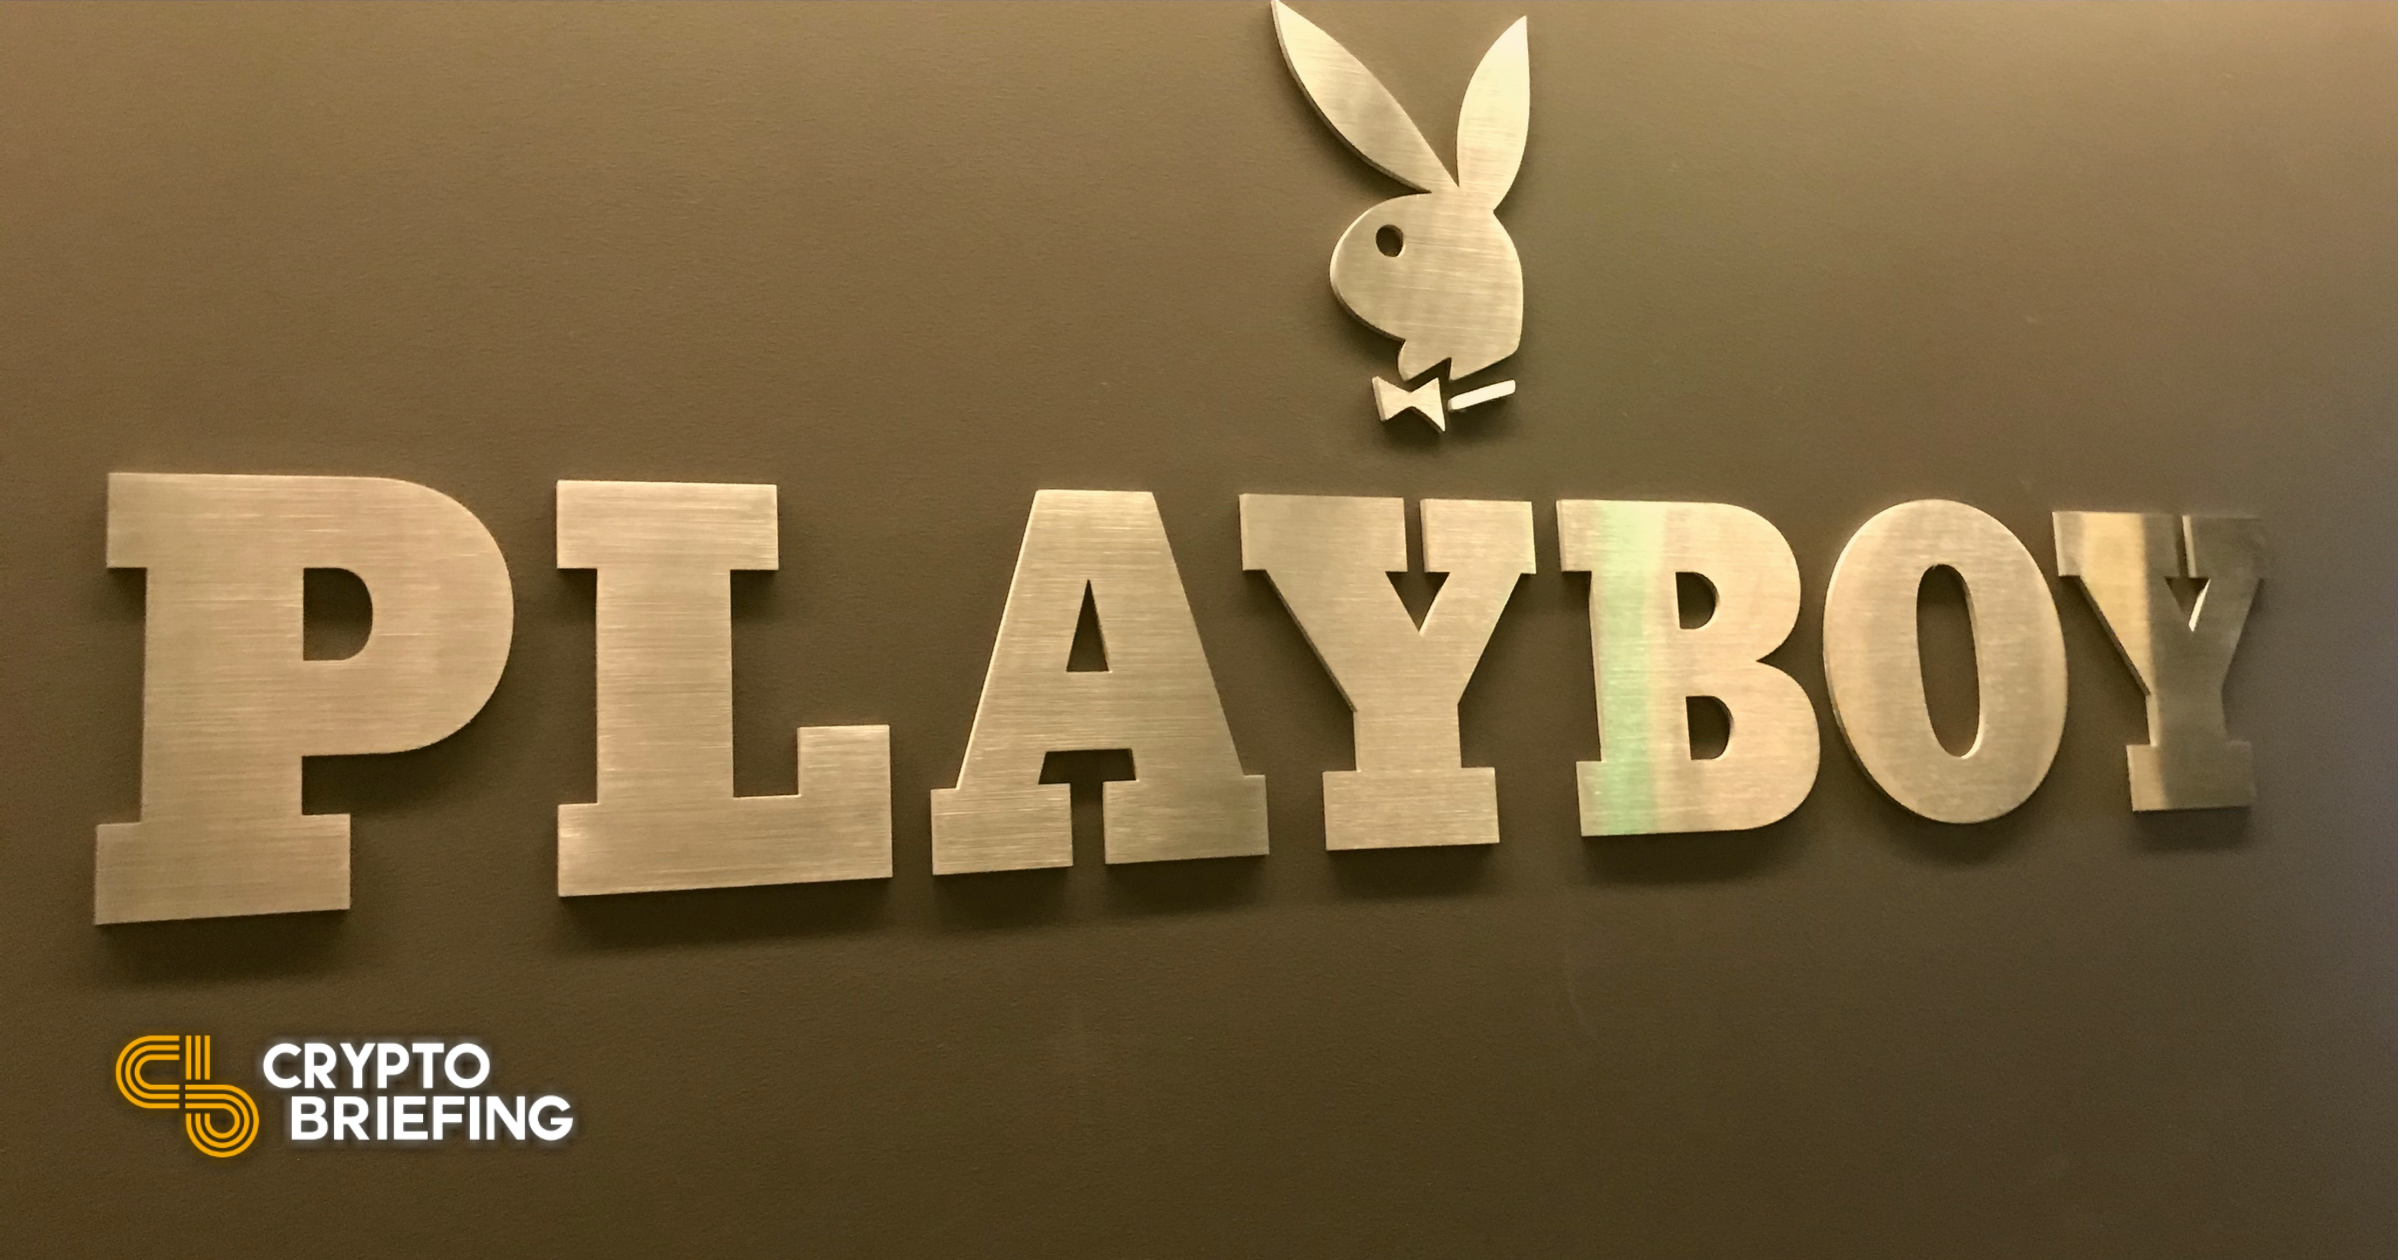 Playboy se asocia con la plataforma NFT Nifty Gateway